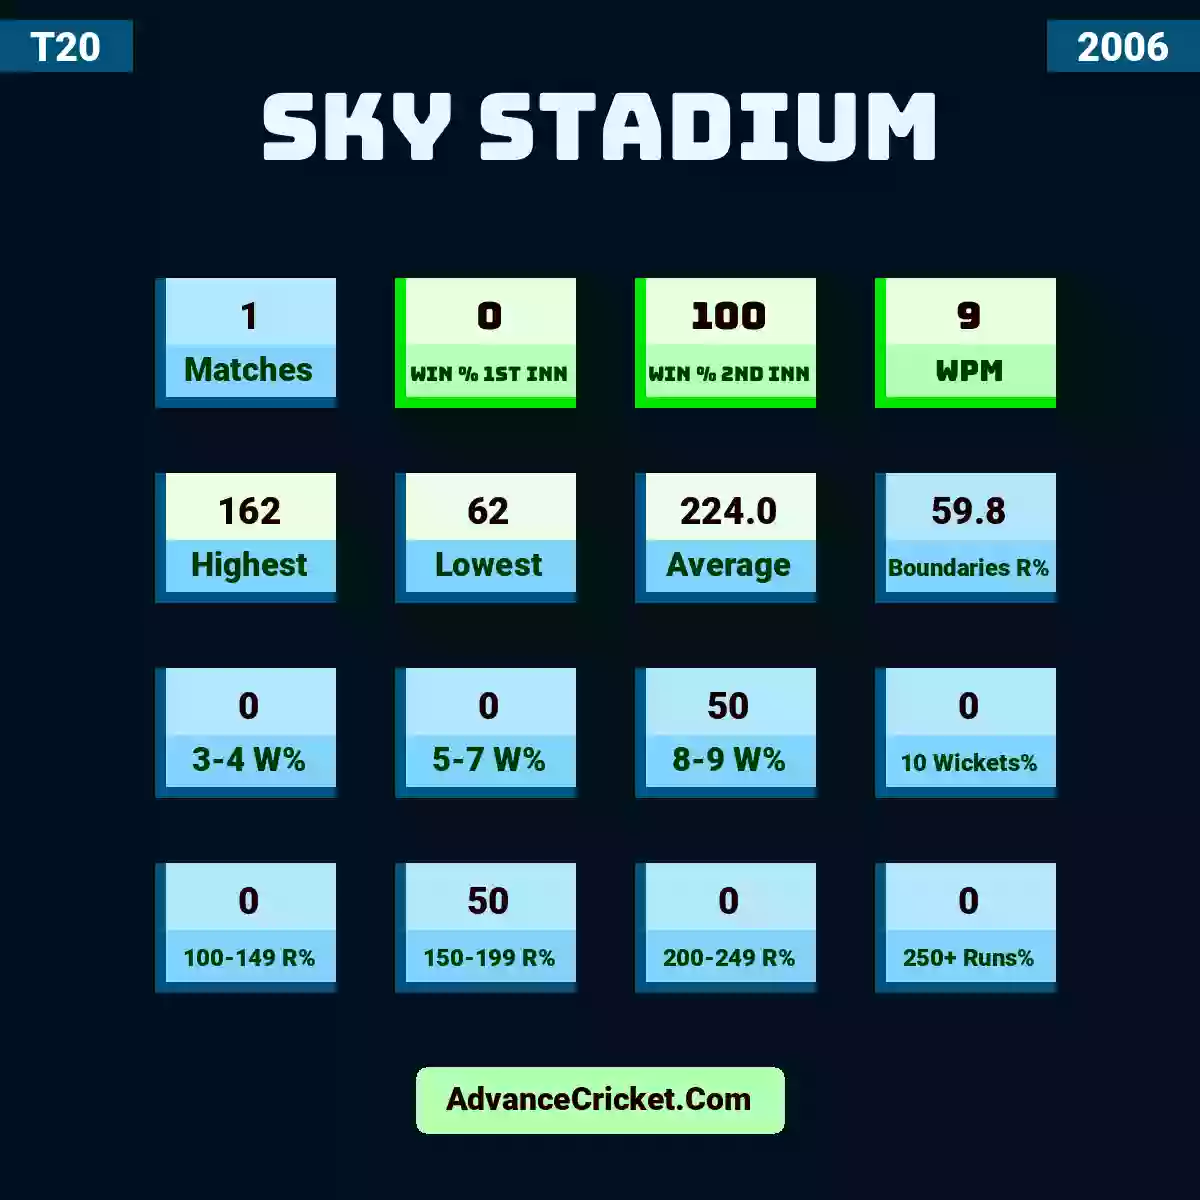 Image showing Sky Stadium with Matches: 1, Win % 1st Inn: 0, Win % 2nd Inn: 100, WPM: 9, Highest: 162, Lowest: 62, Average: 224.0, Boundaries R%: 59.8, 3-4 W%: 0, 5-7 W%: 0, 8-9 W%: 50, 10 Wickets%: 0, 100-149 R%: 0, 150-199 R%: 50, 200-249 R%: 0, 250+ Runs%: 0.